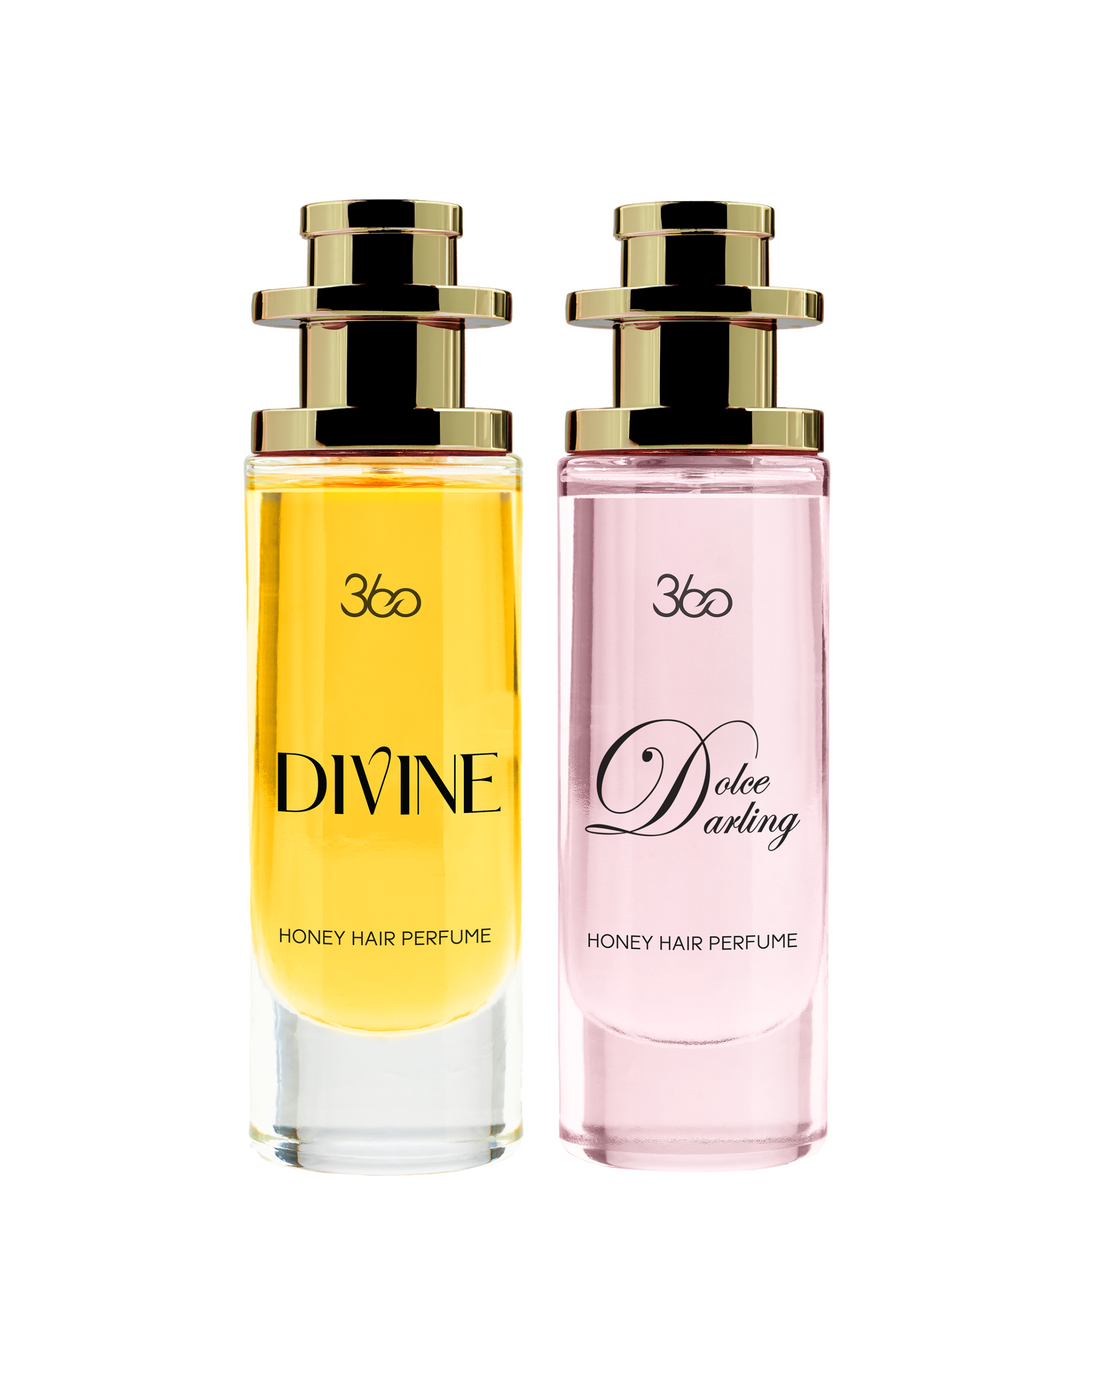 [Combo] Honey Hair Perfume Divine 25ml + Dolce Darling 25ml